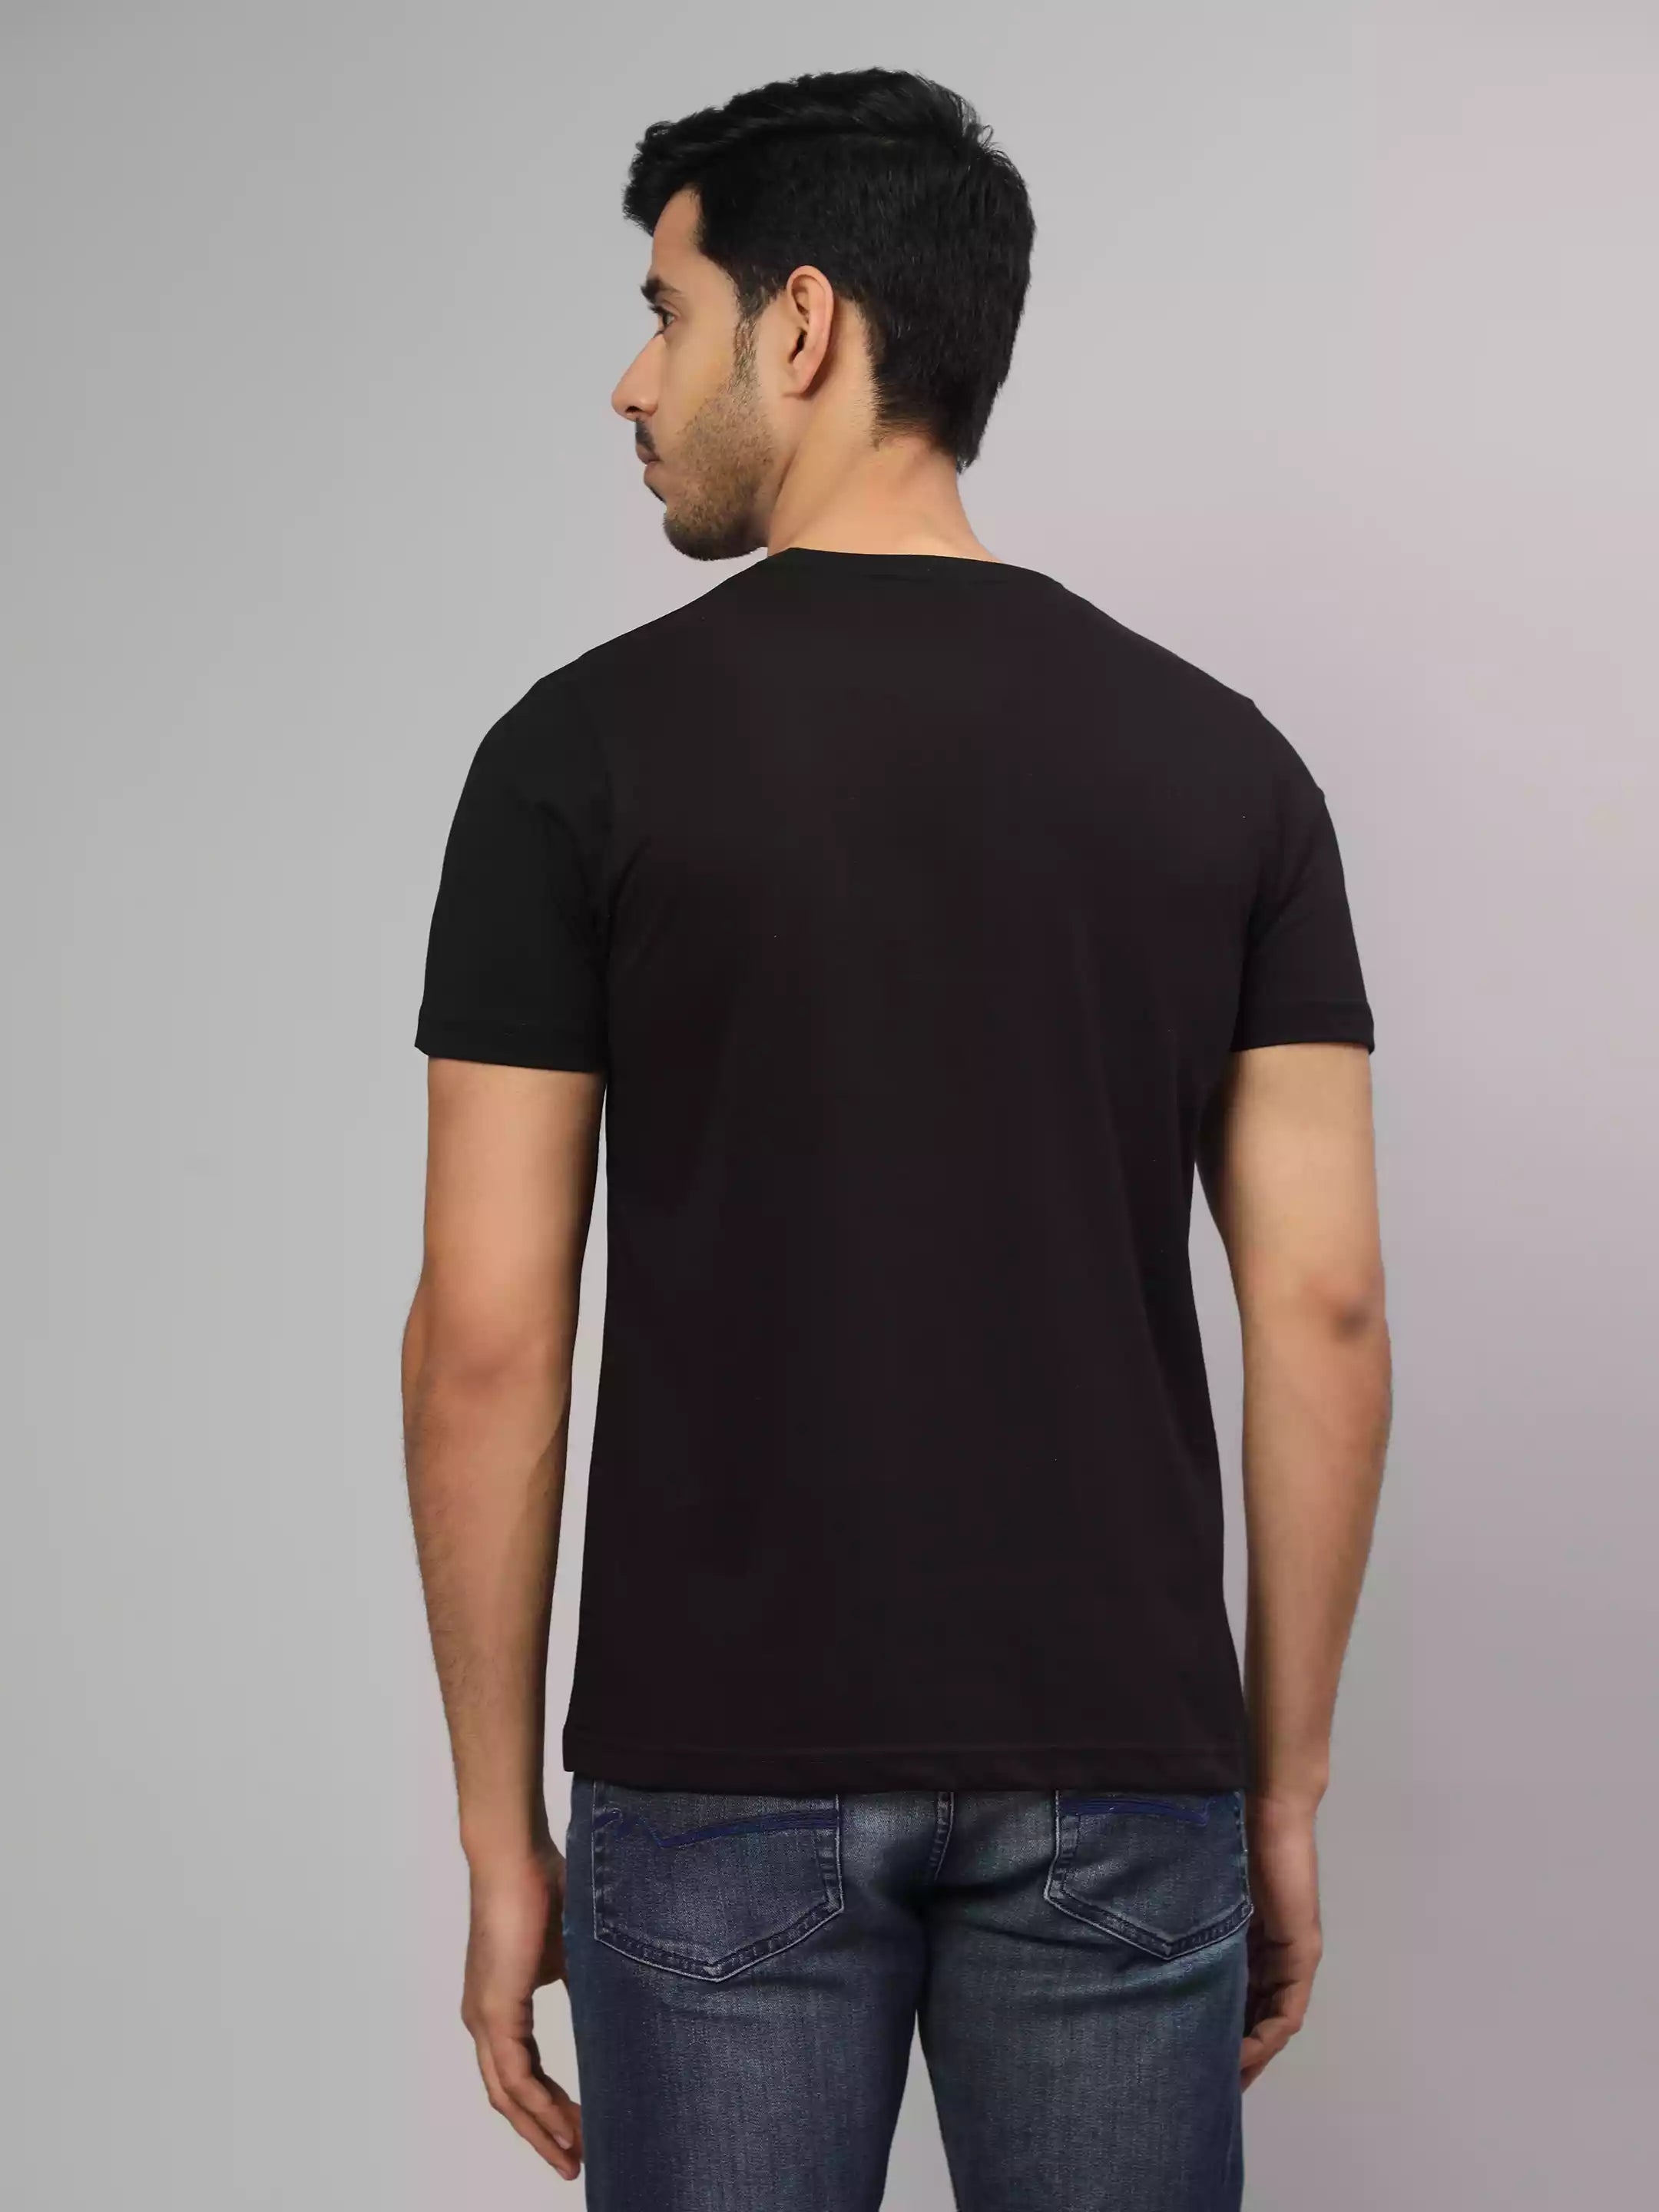 Navatach Talent - Sukhiaatma Unisex Marathi Graphic Printed Black T-shirt